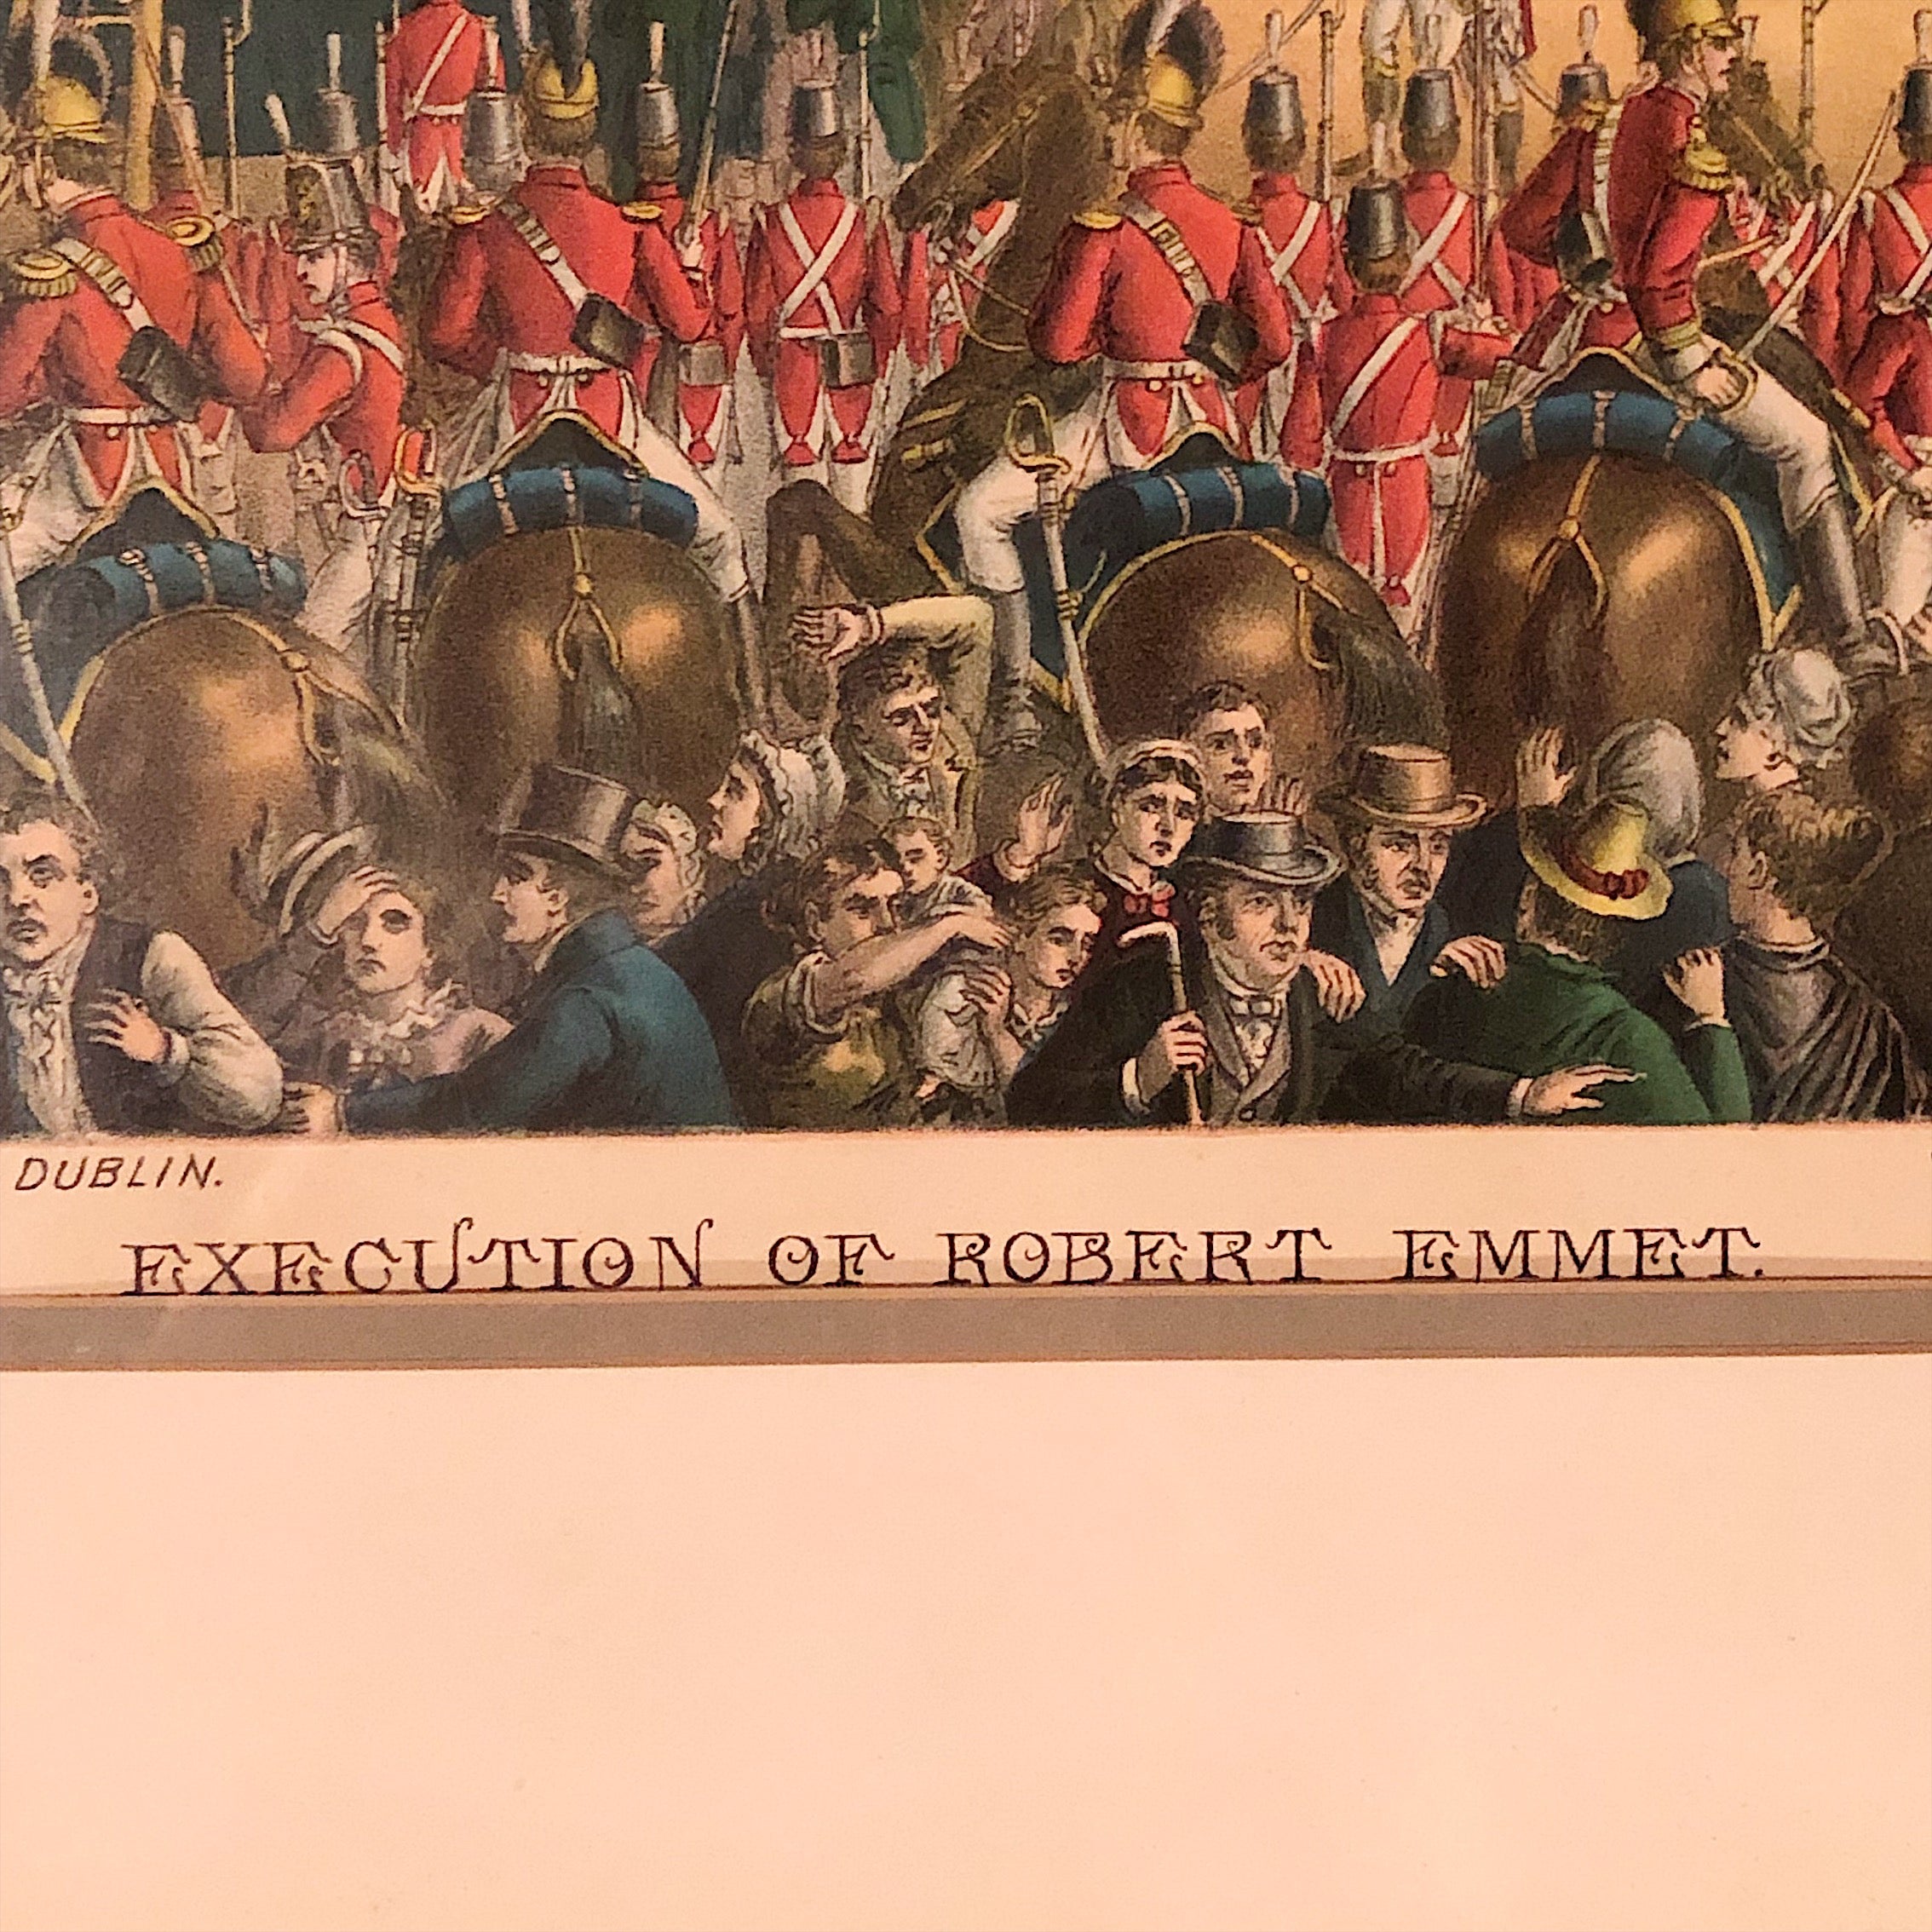 Execution of Robert Emmet Print